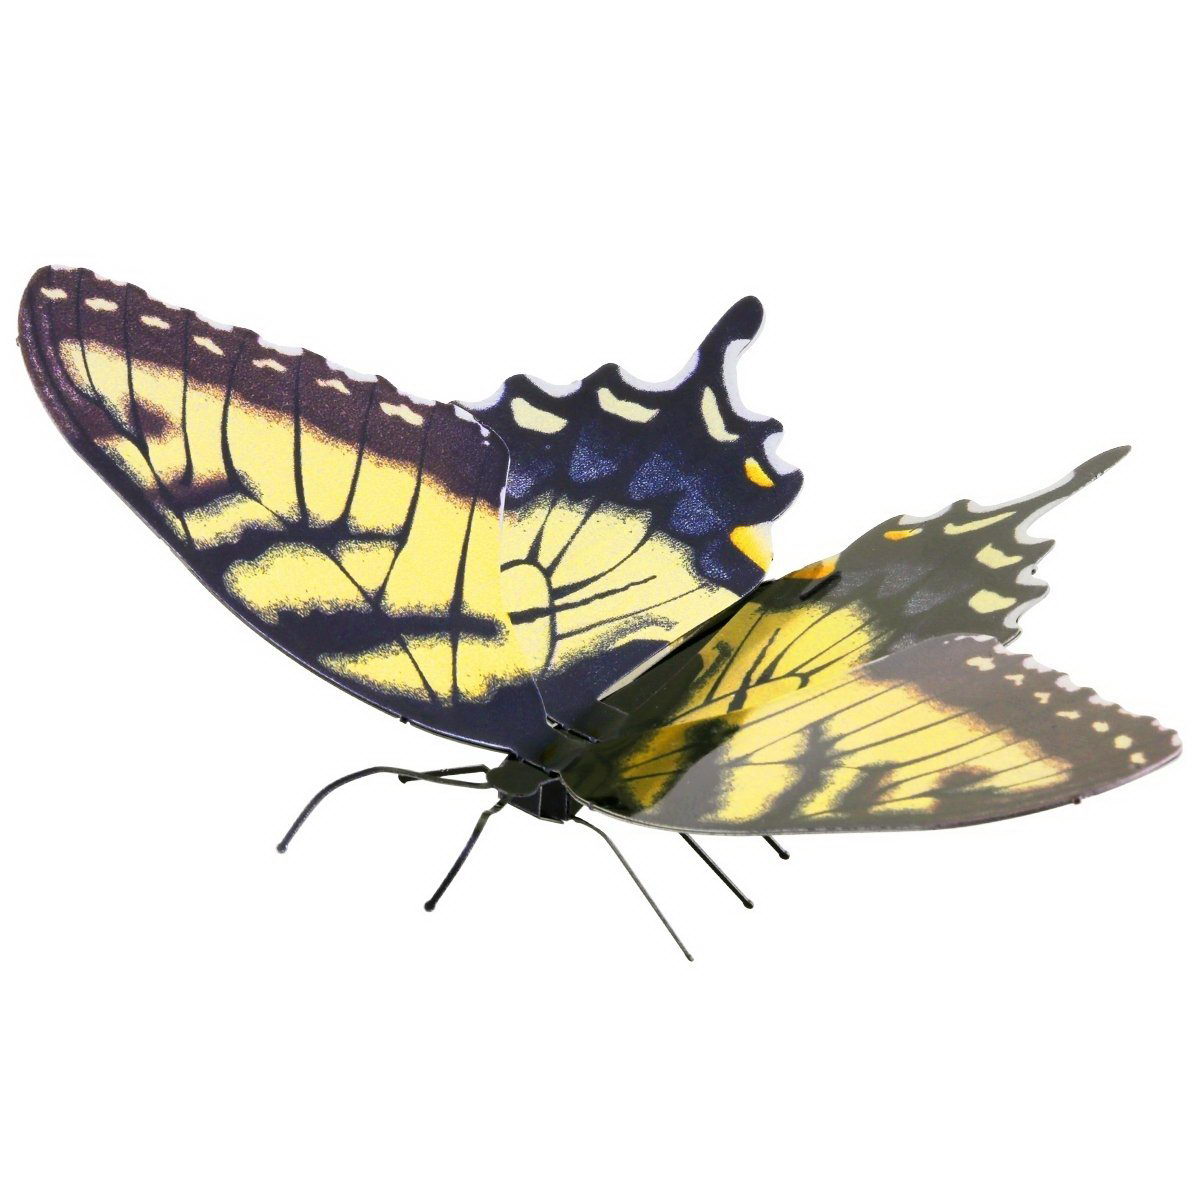 Metal Earth - Schmetterling Tigerschwalbenschwanz - Tiger Swallowtail